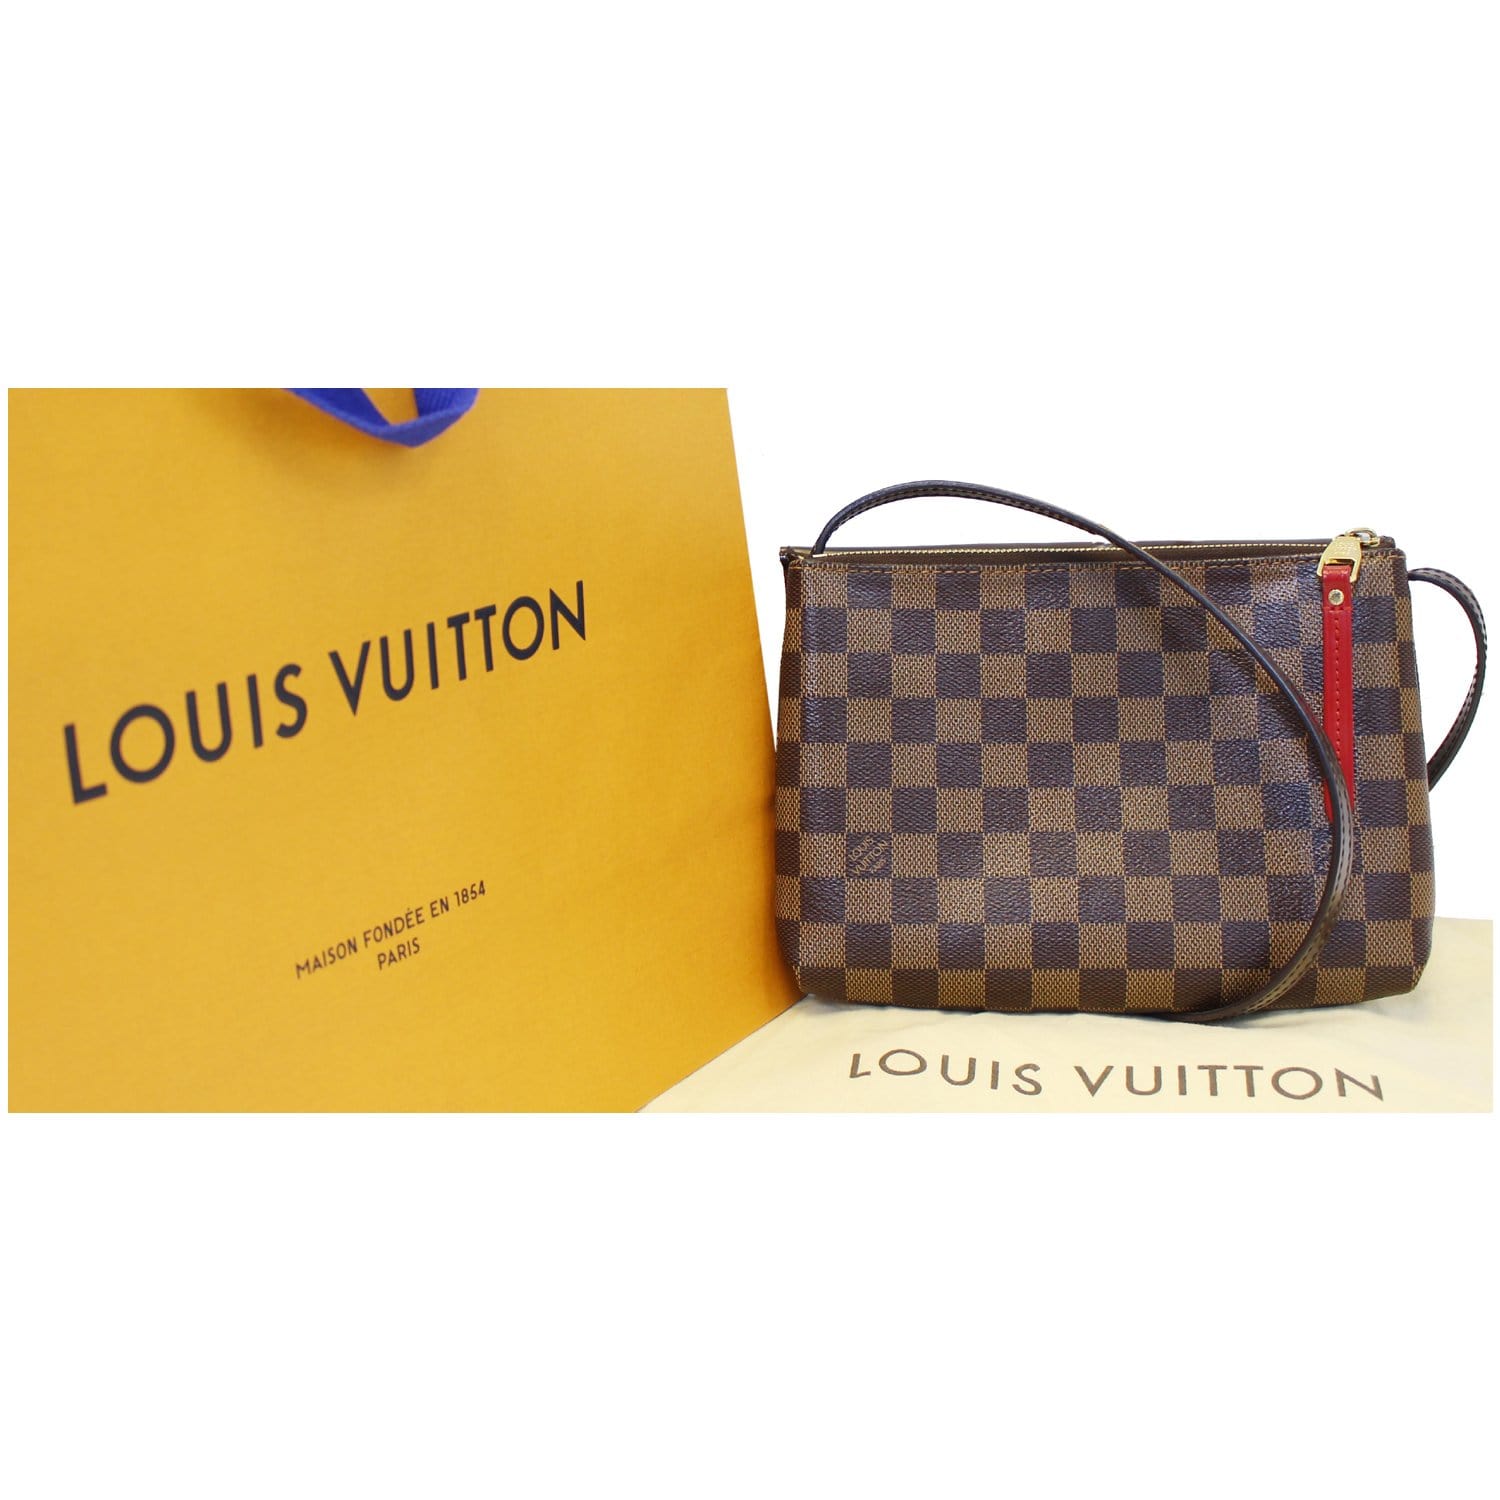 Louis Vuitton Twisted Box 2way Handbag Purse Monogram M40275 SN3194 88193